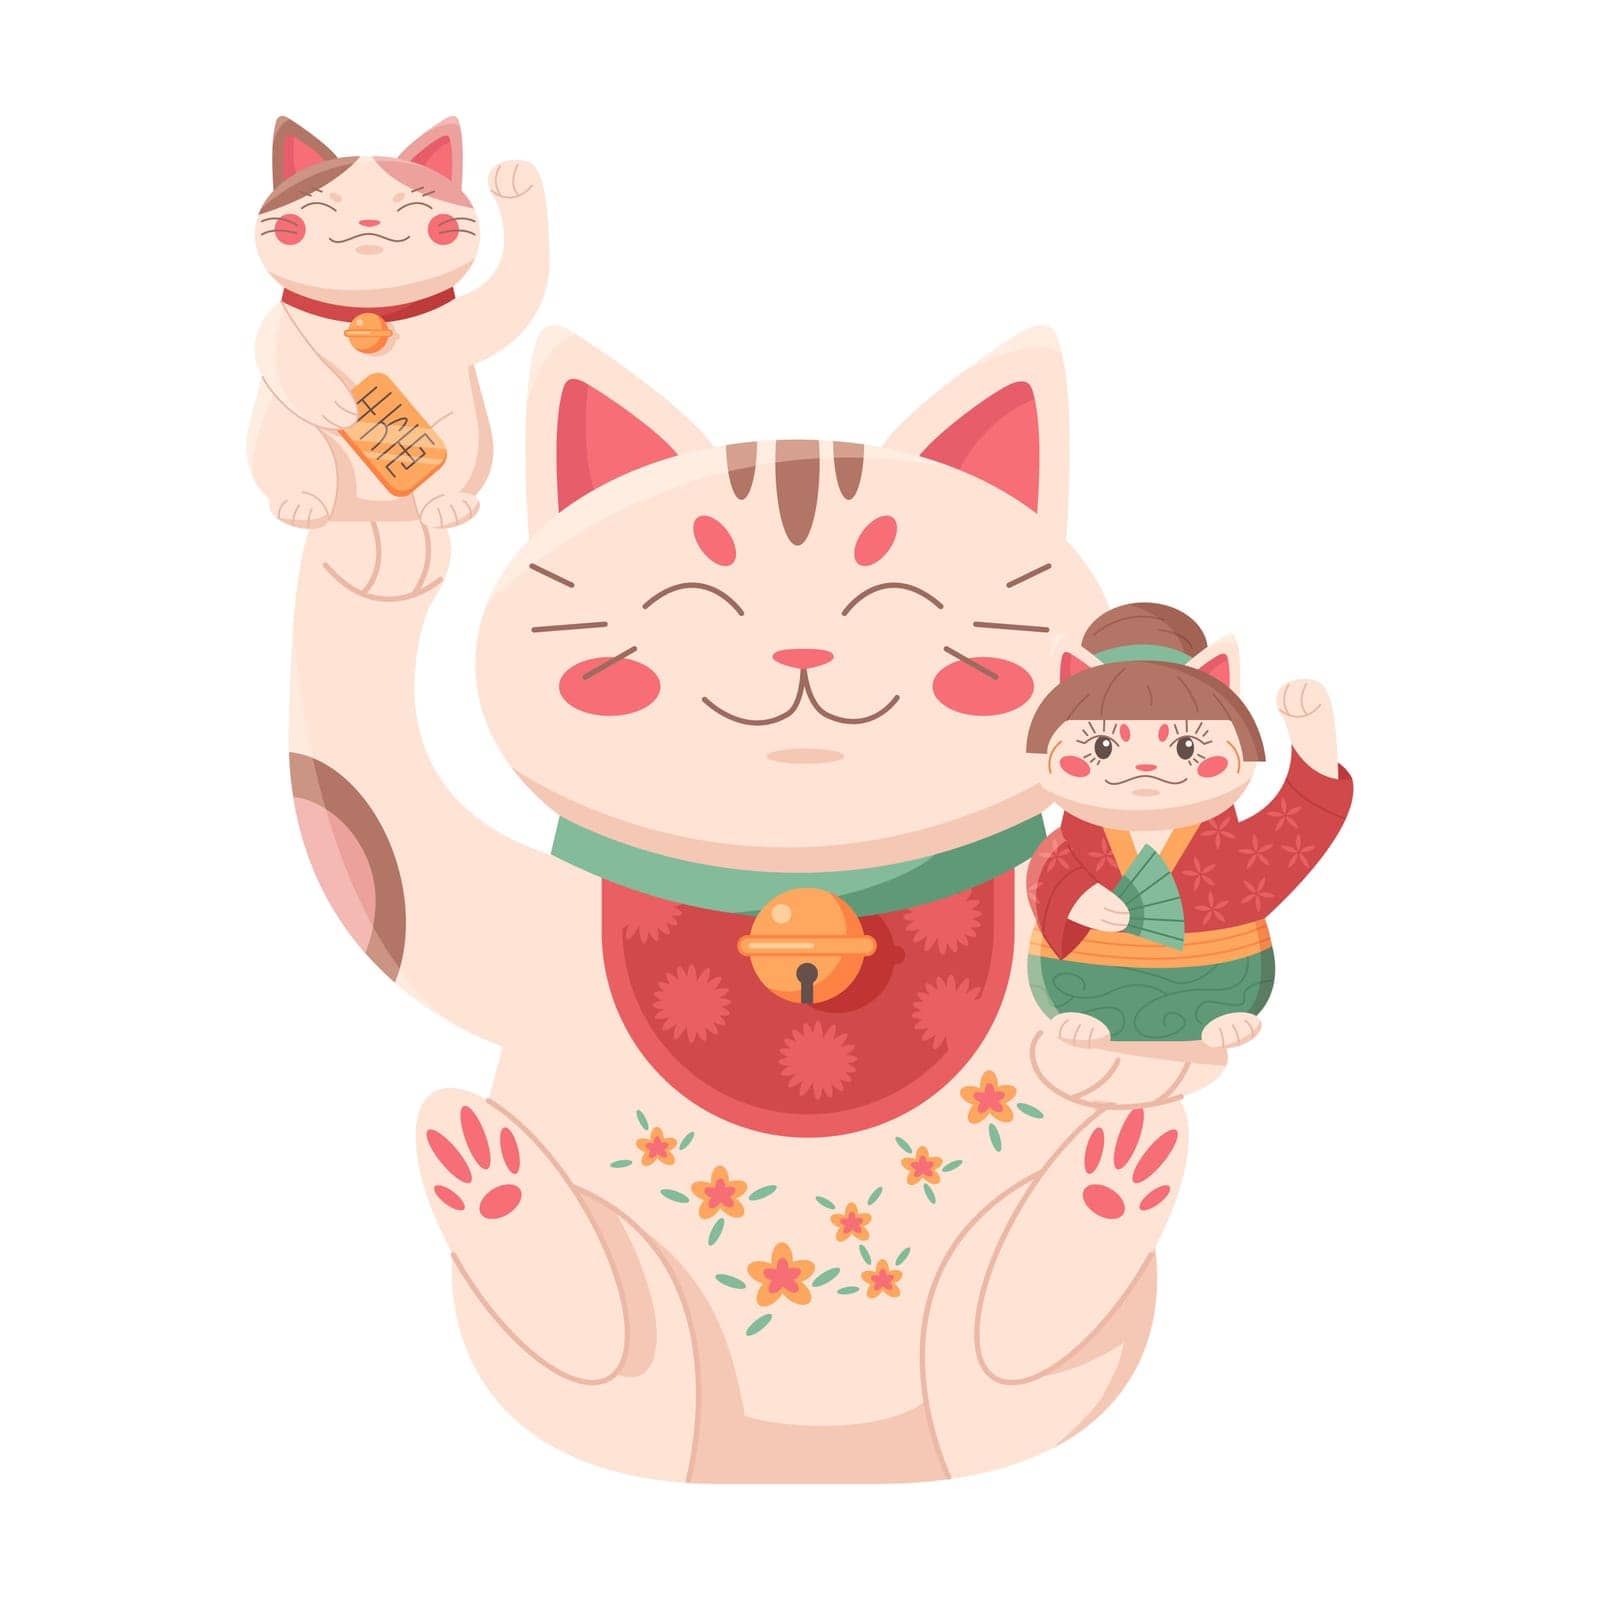 Maneki neko fortune cat. Traditional japanese lucky cat, bringing wealth cartoon vector illustration